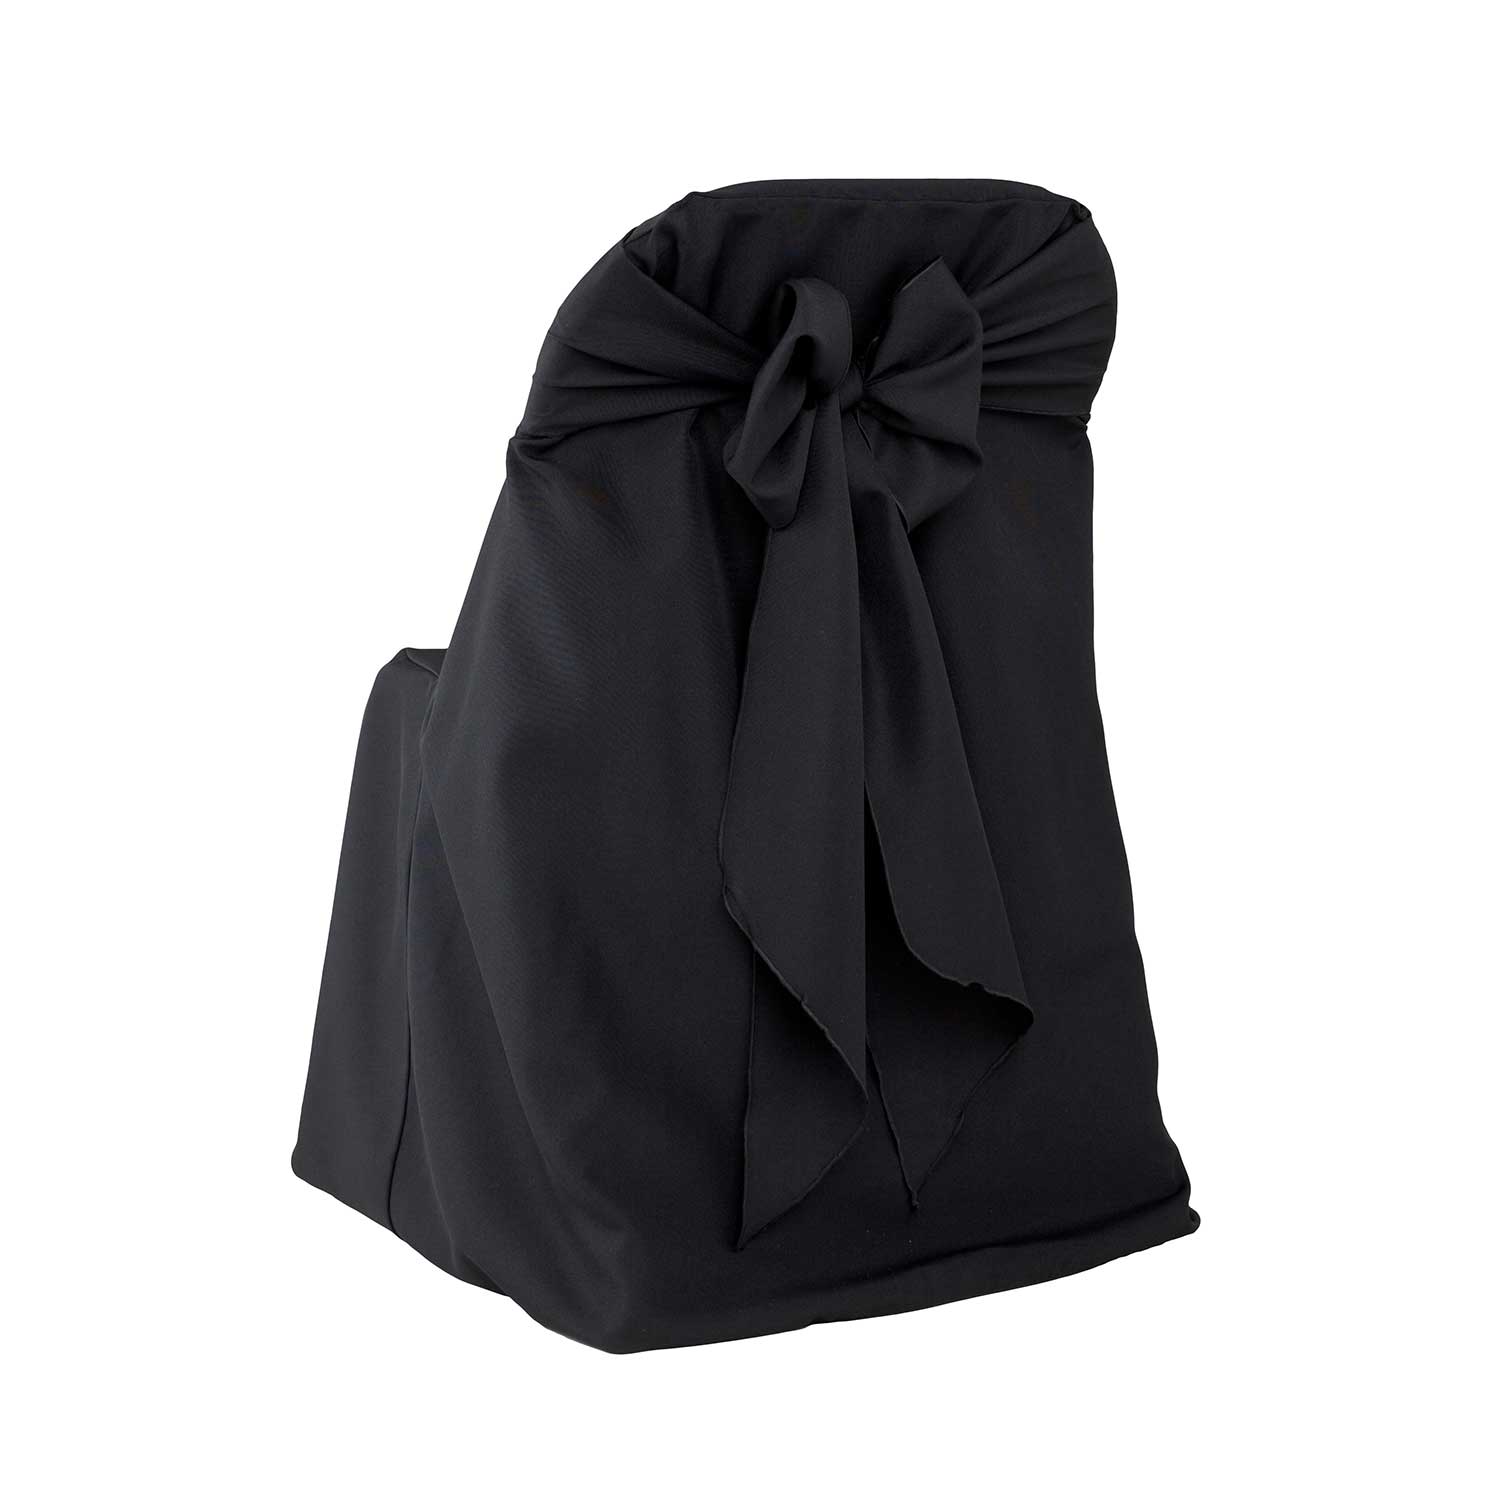 Black Folding Chair Chair Cover 1 